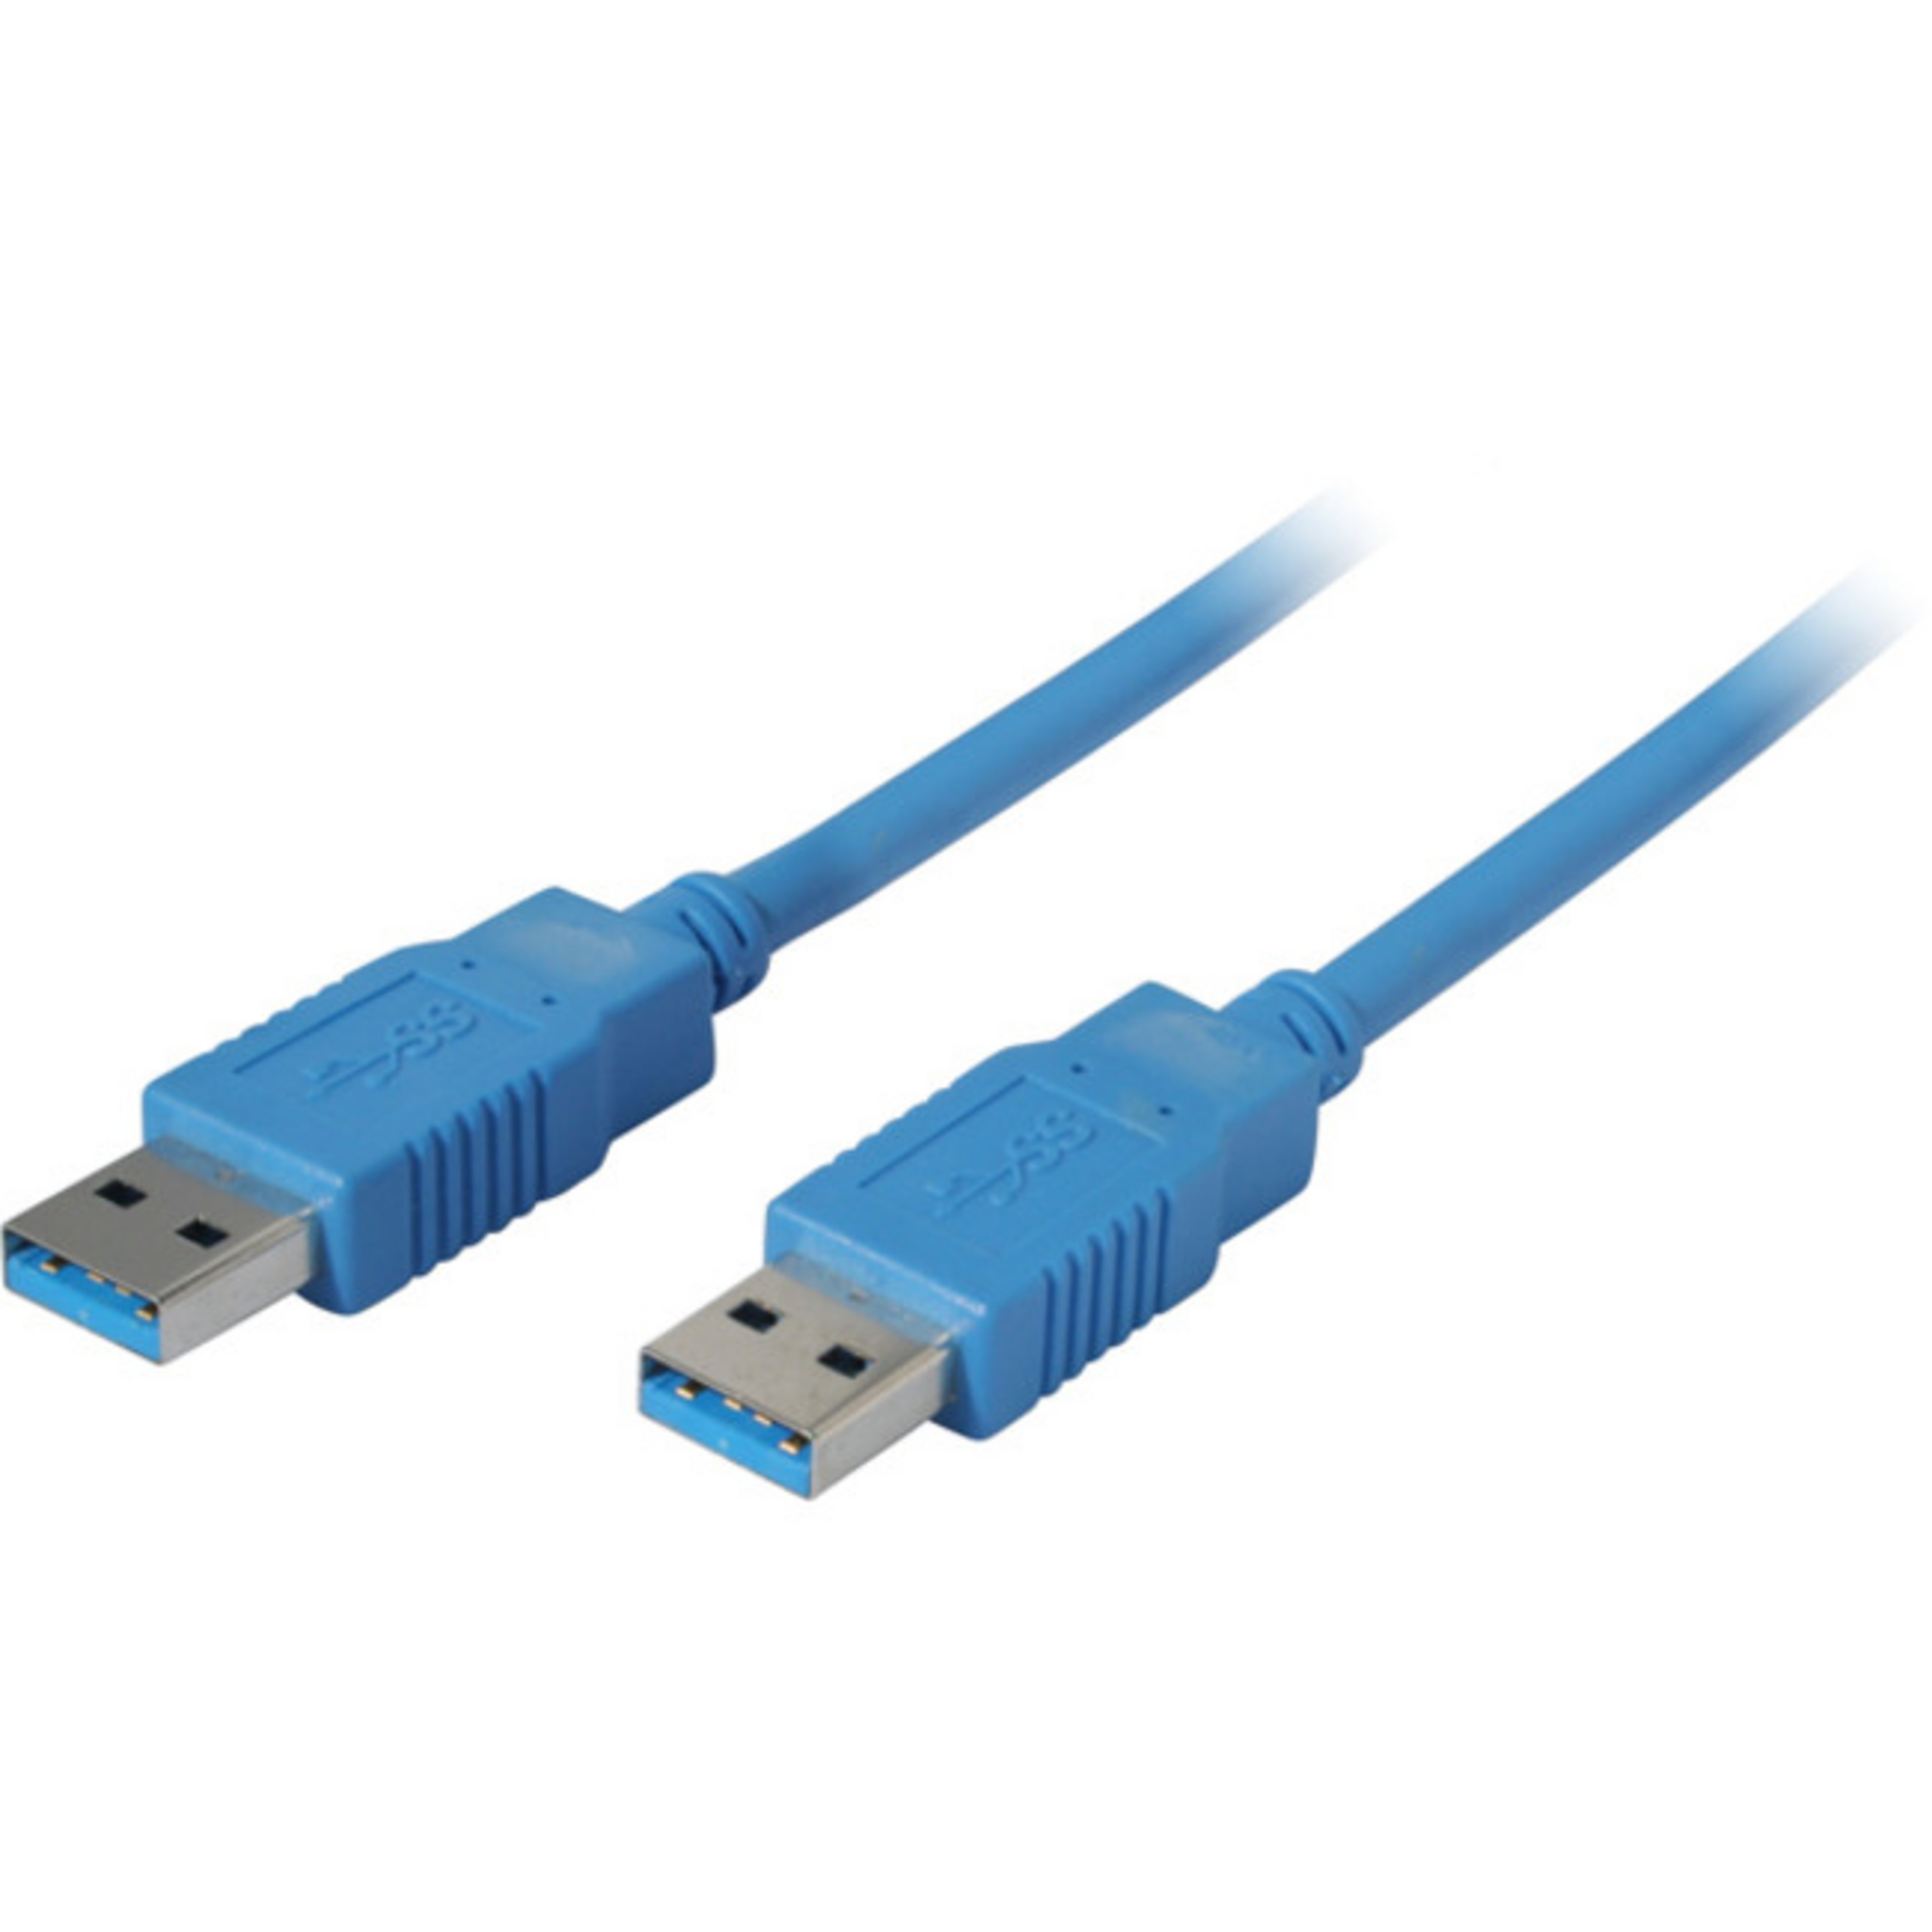 S/CONN MAXIMUM CONNECTIVITY USB Kabel A Stecker Stecker / USB 5m 3.0 USB Kabel blau A